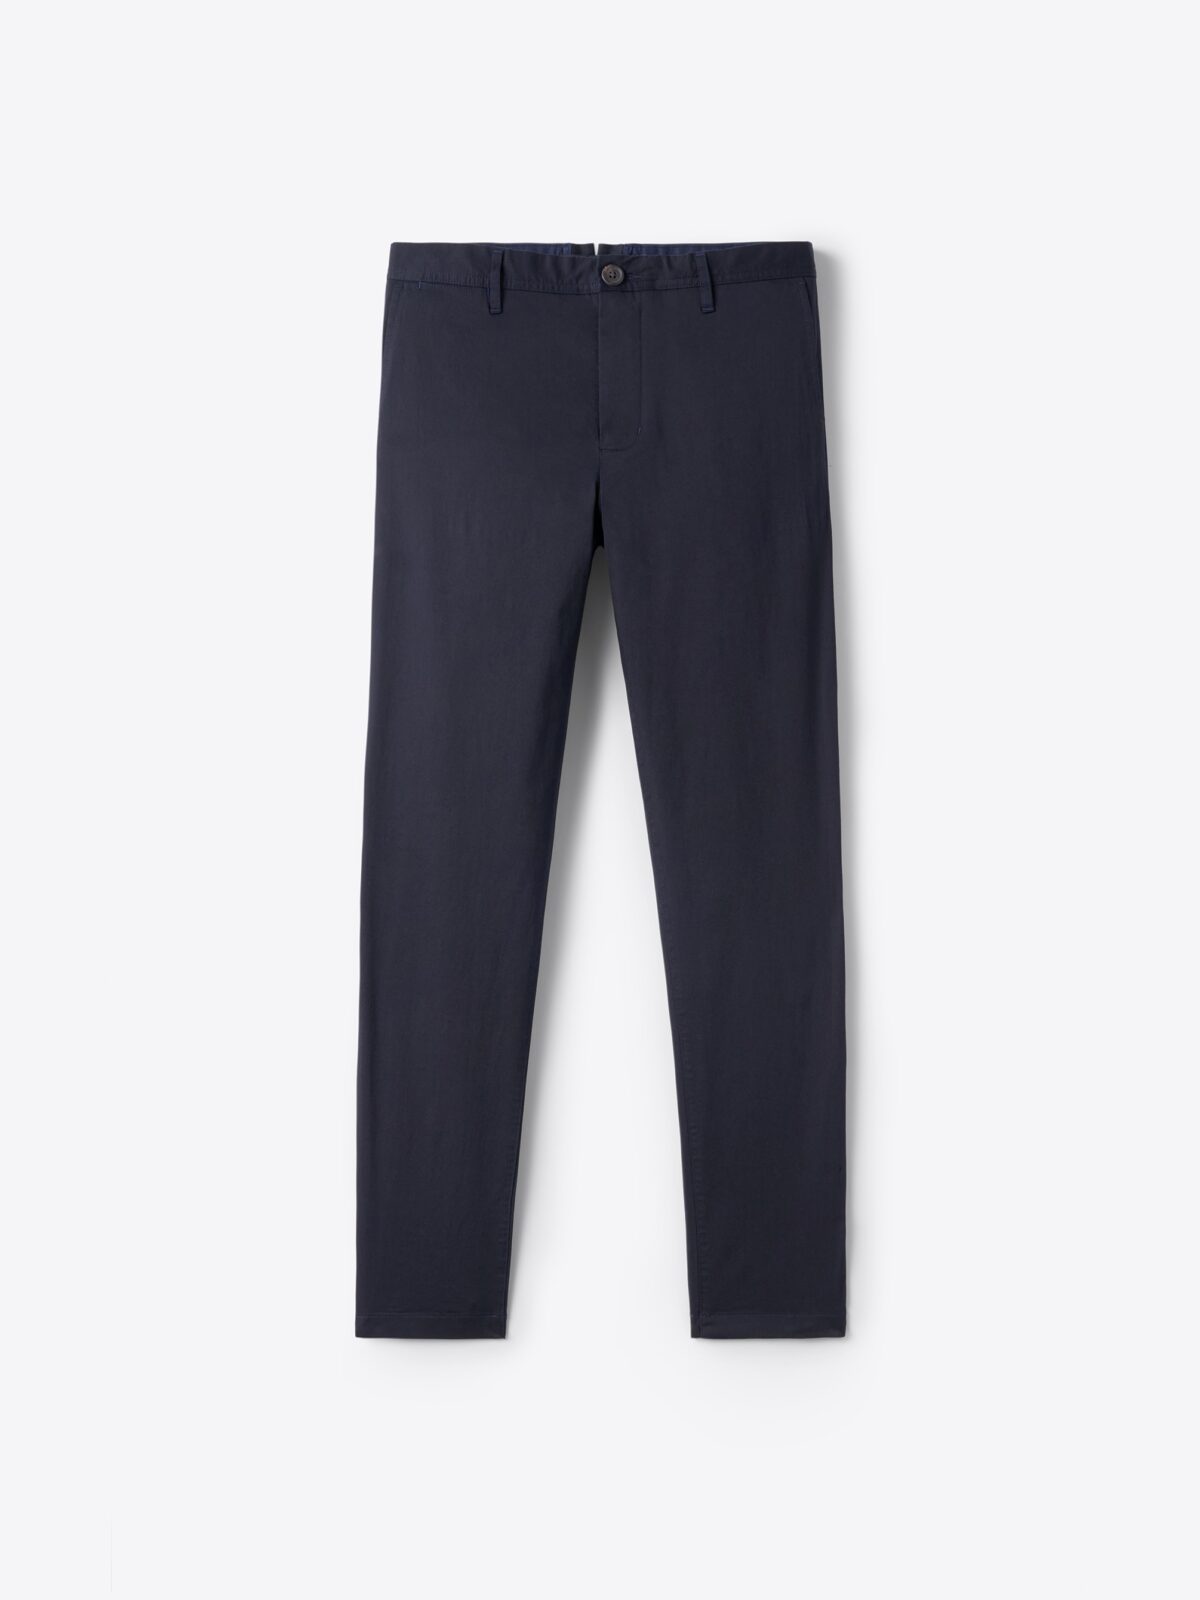 Di Sondrio Navy Lightweight Stretch Cotton Chino - Custom Fit Pants